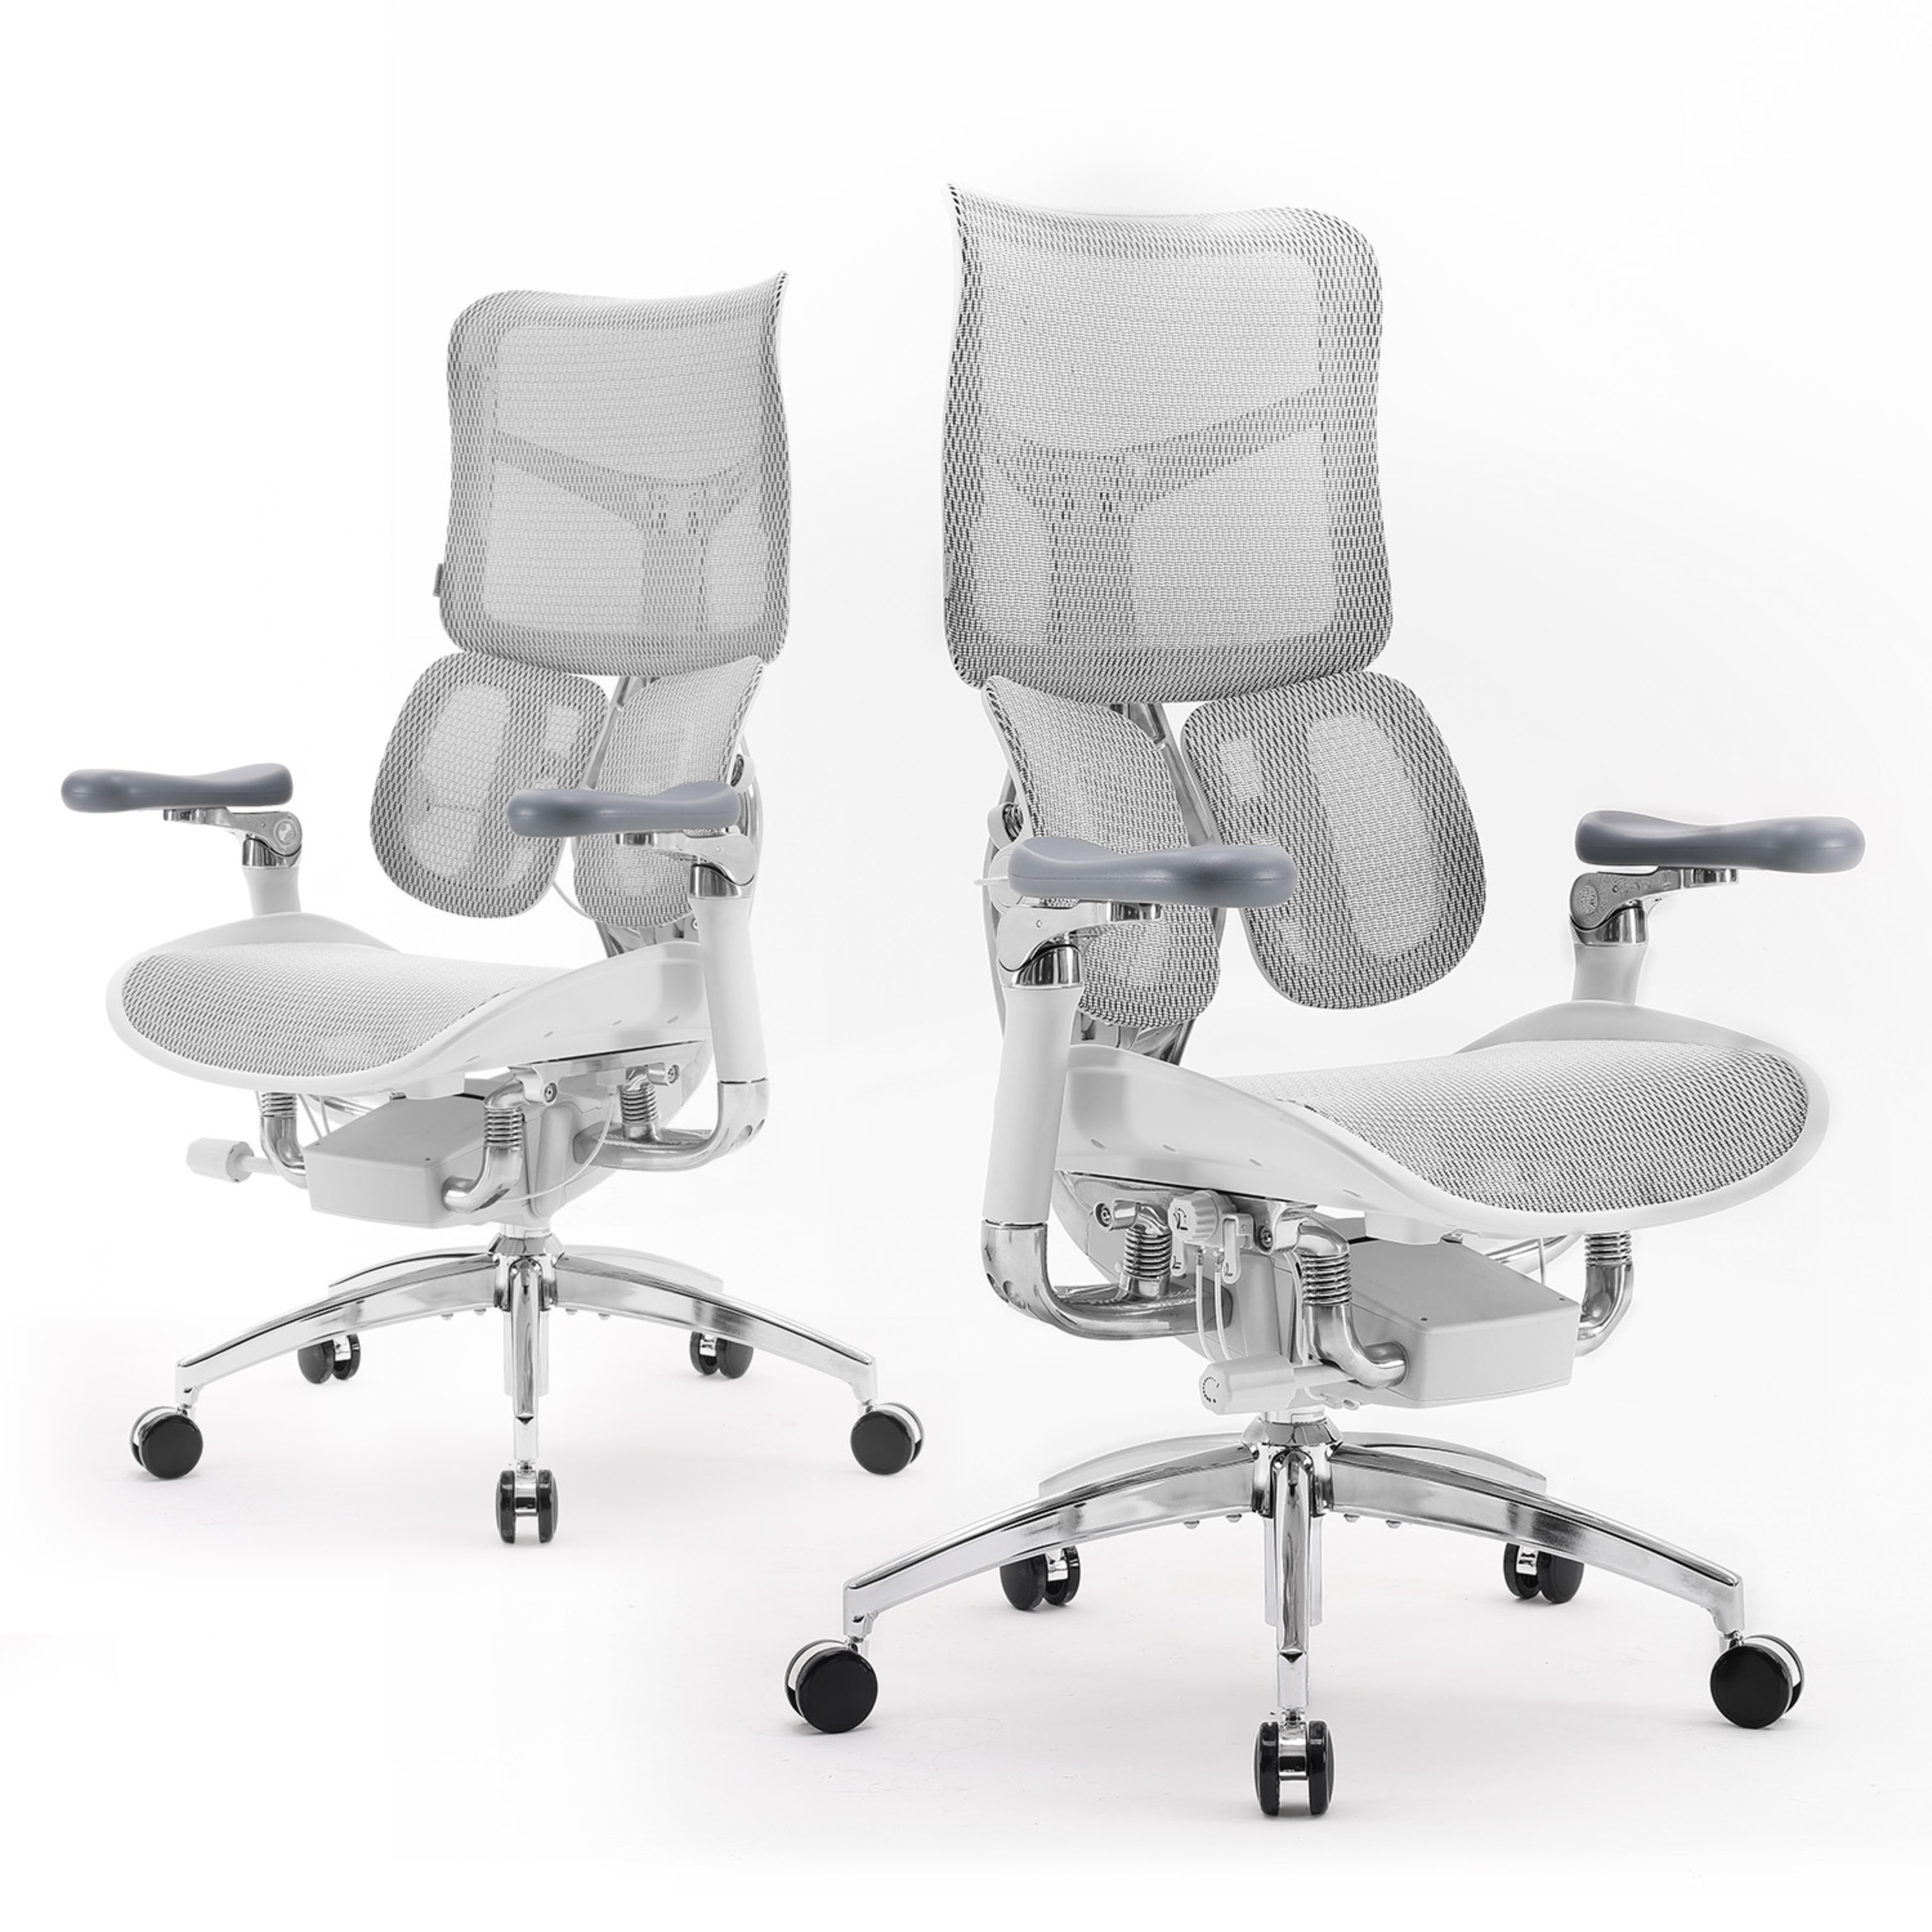 SIHOO Doro S300 Ergonomic Office Chair - Dual-layer Dynamic Lumbar